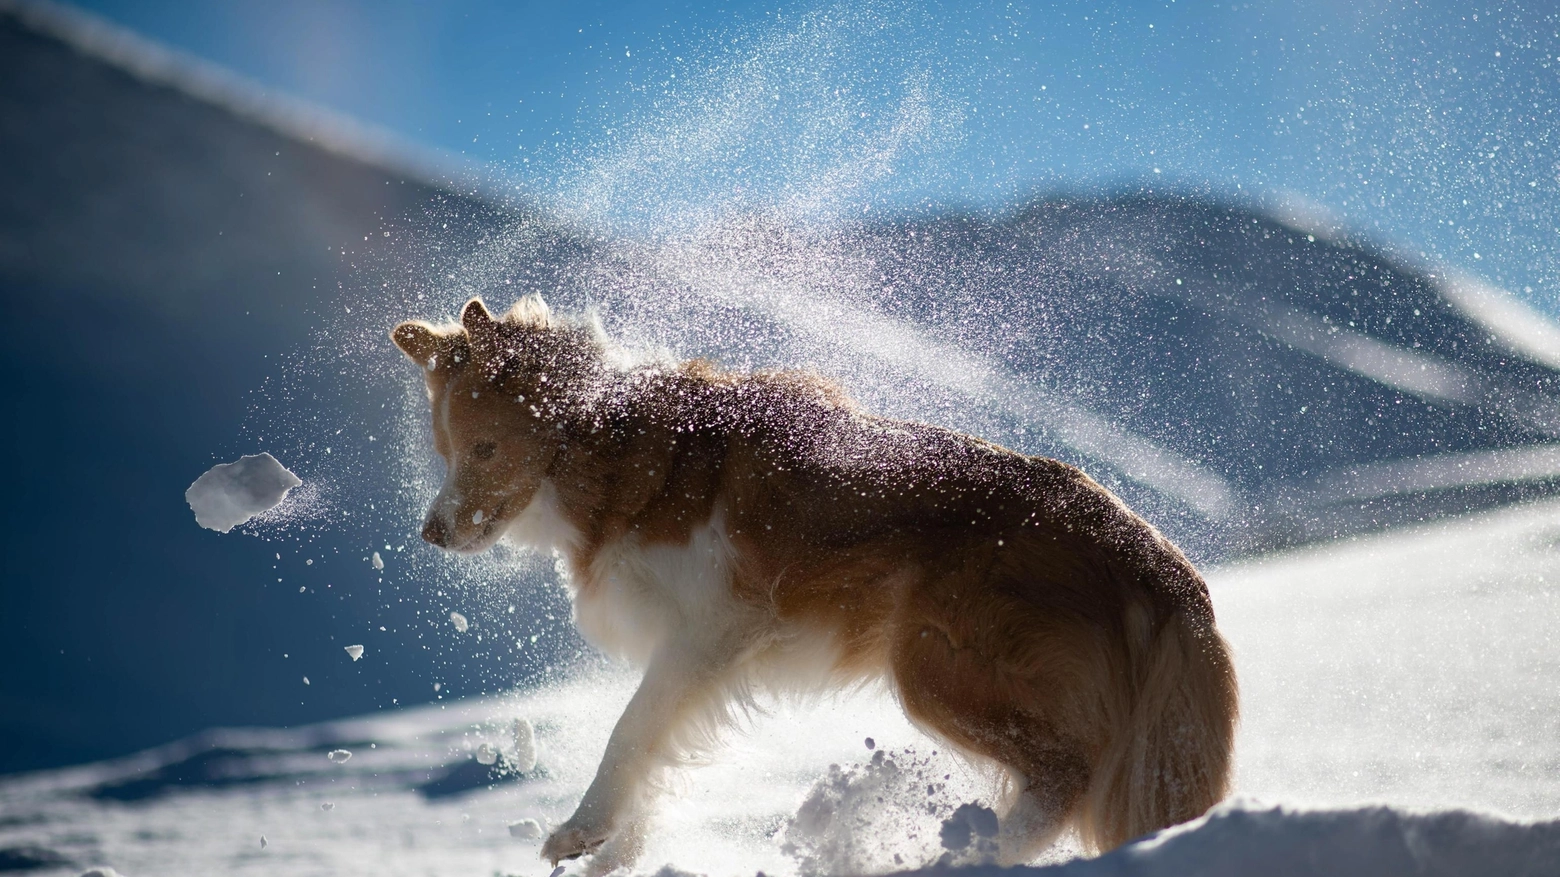 Un cane tra la neve (Ansa)